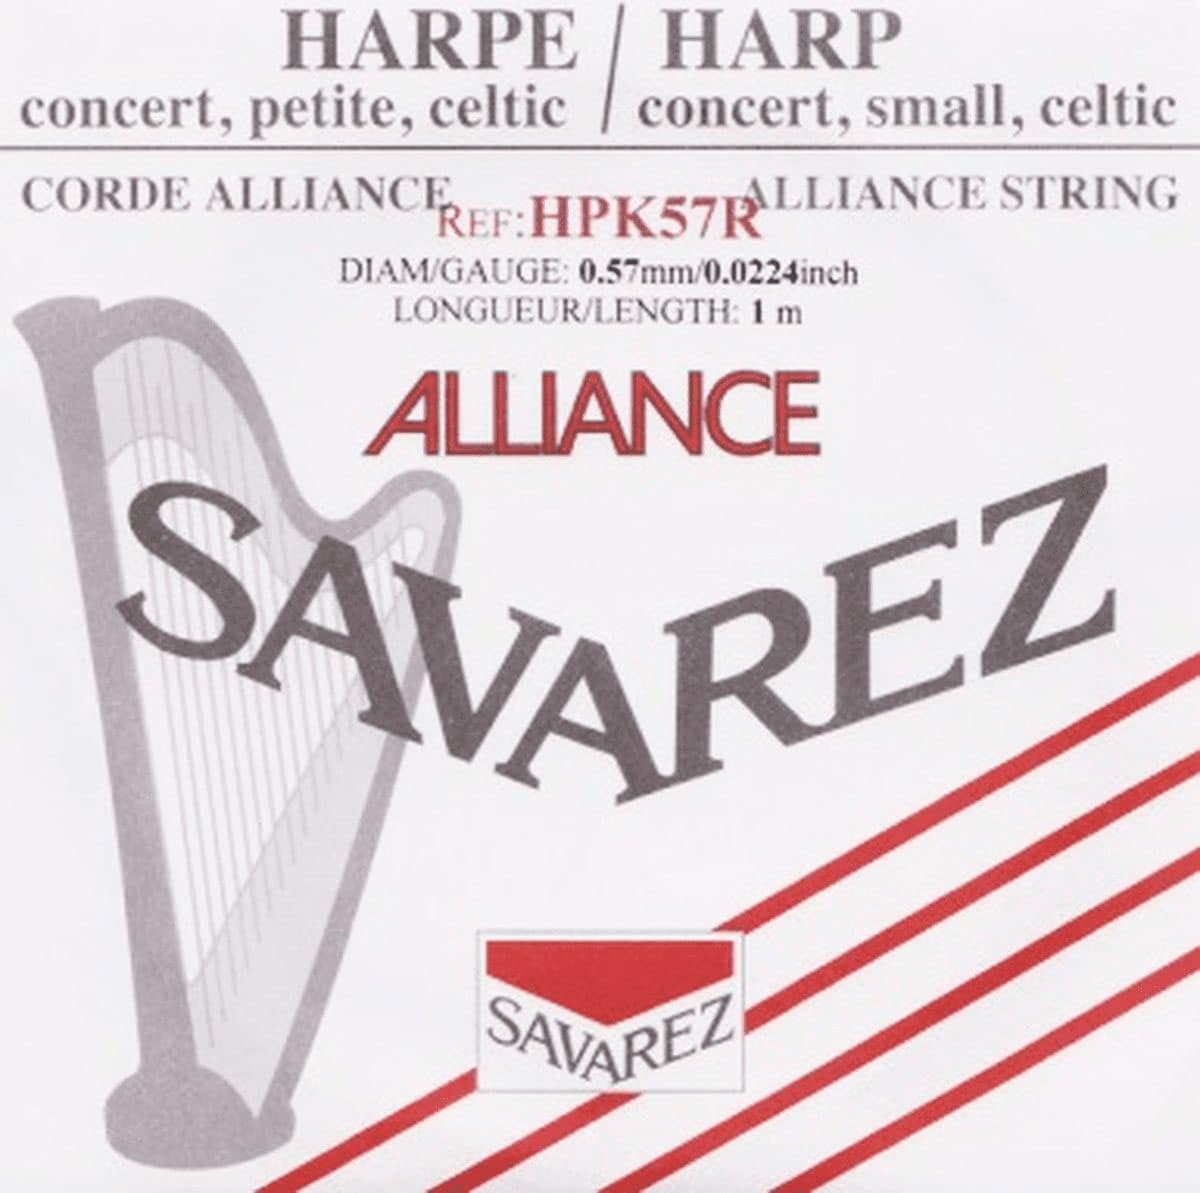 SAVAREZ HARP ALLIANCE STRING DIAMETER 0,57MM RED